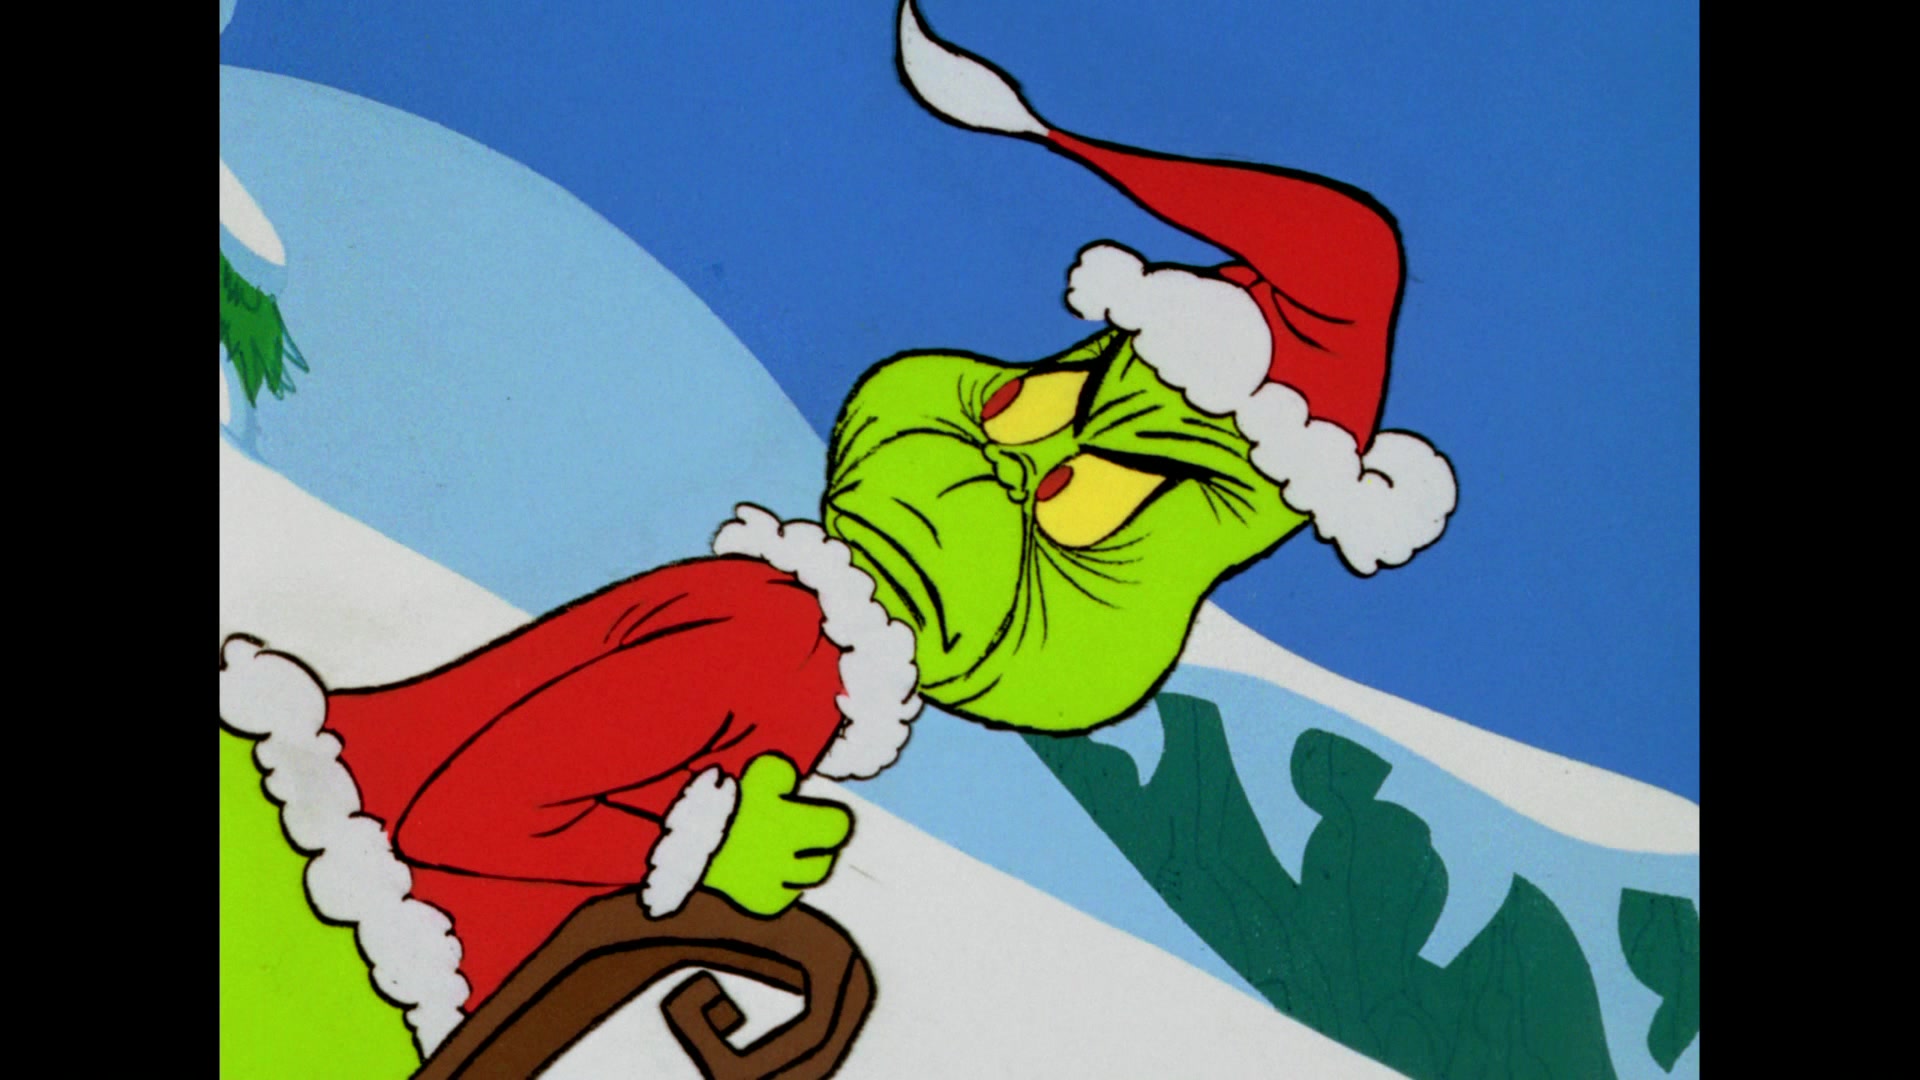 How The Grinch Stole Christmas 1966 Screencap Fancaps